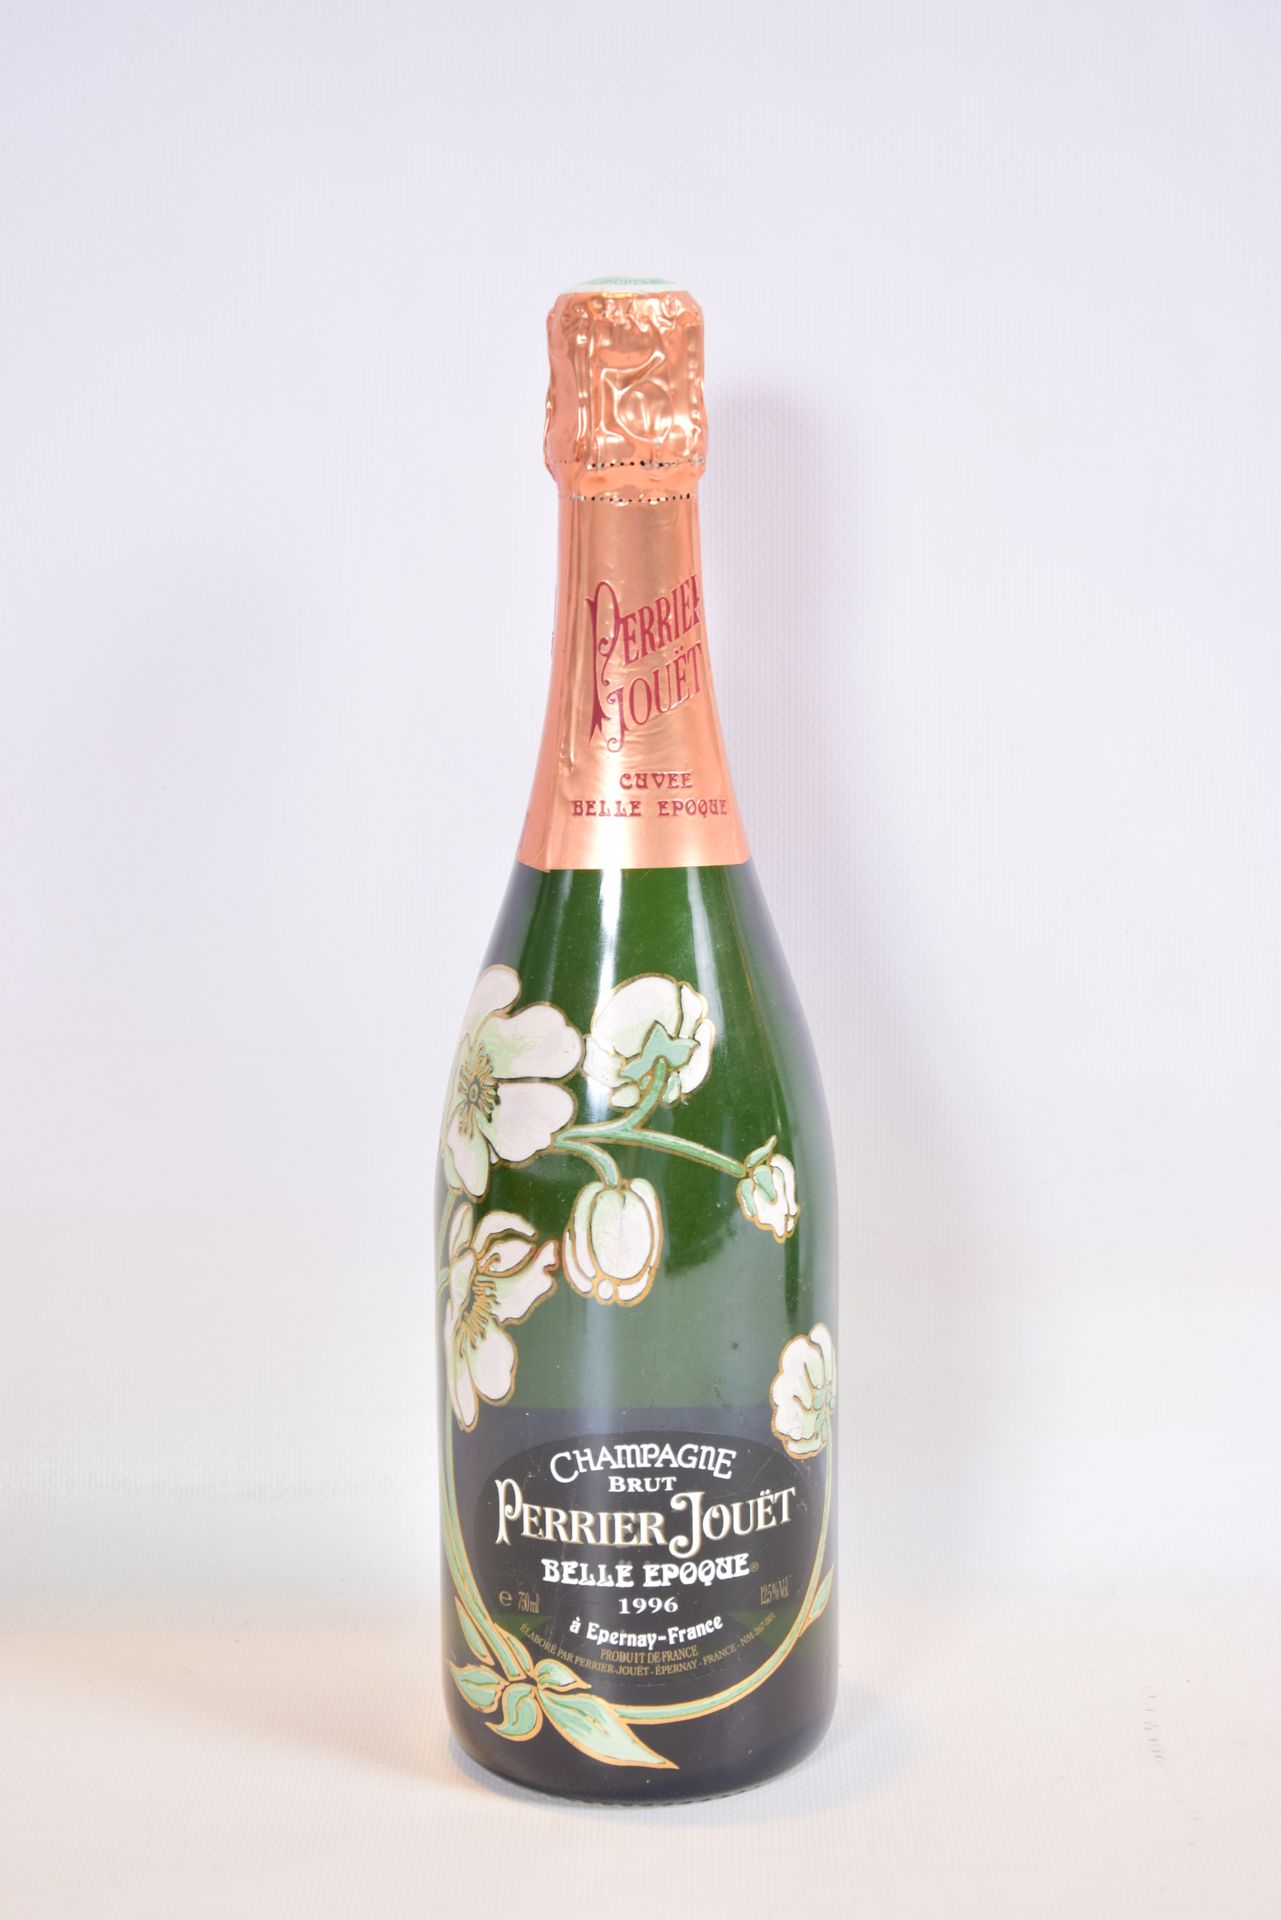 Null 1 Blle Champagne PERRIER JOUËT Belle Epoque Brut 1996

	Presentación y nive&hellip;